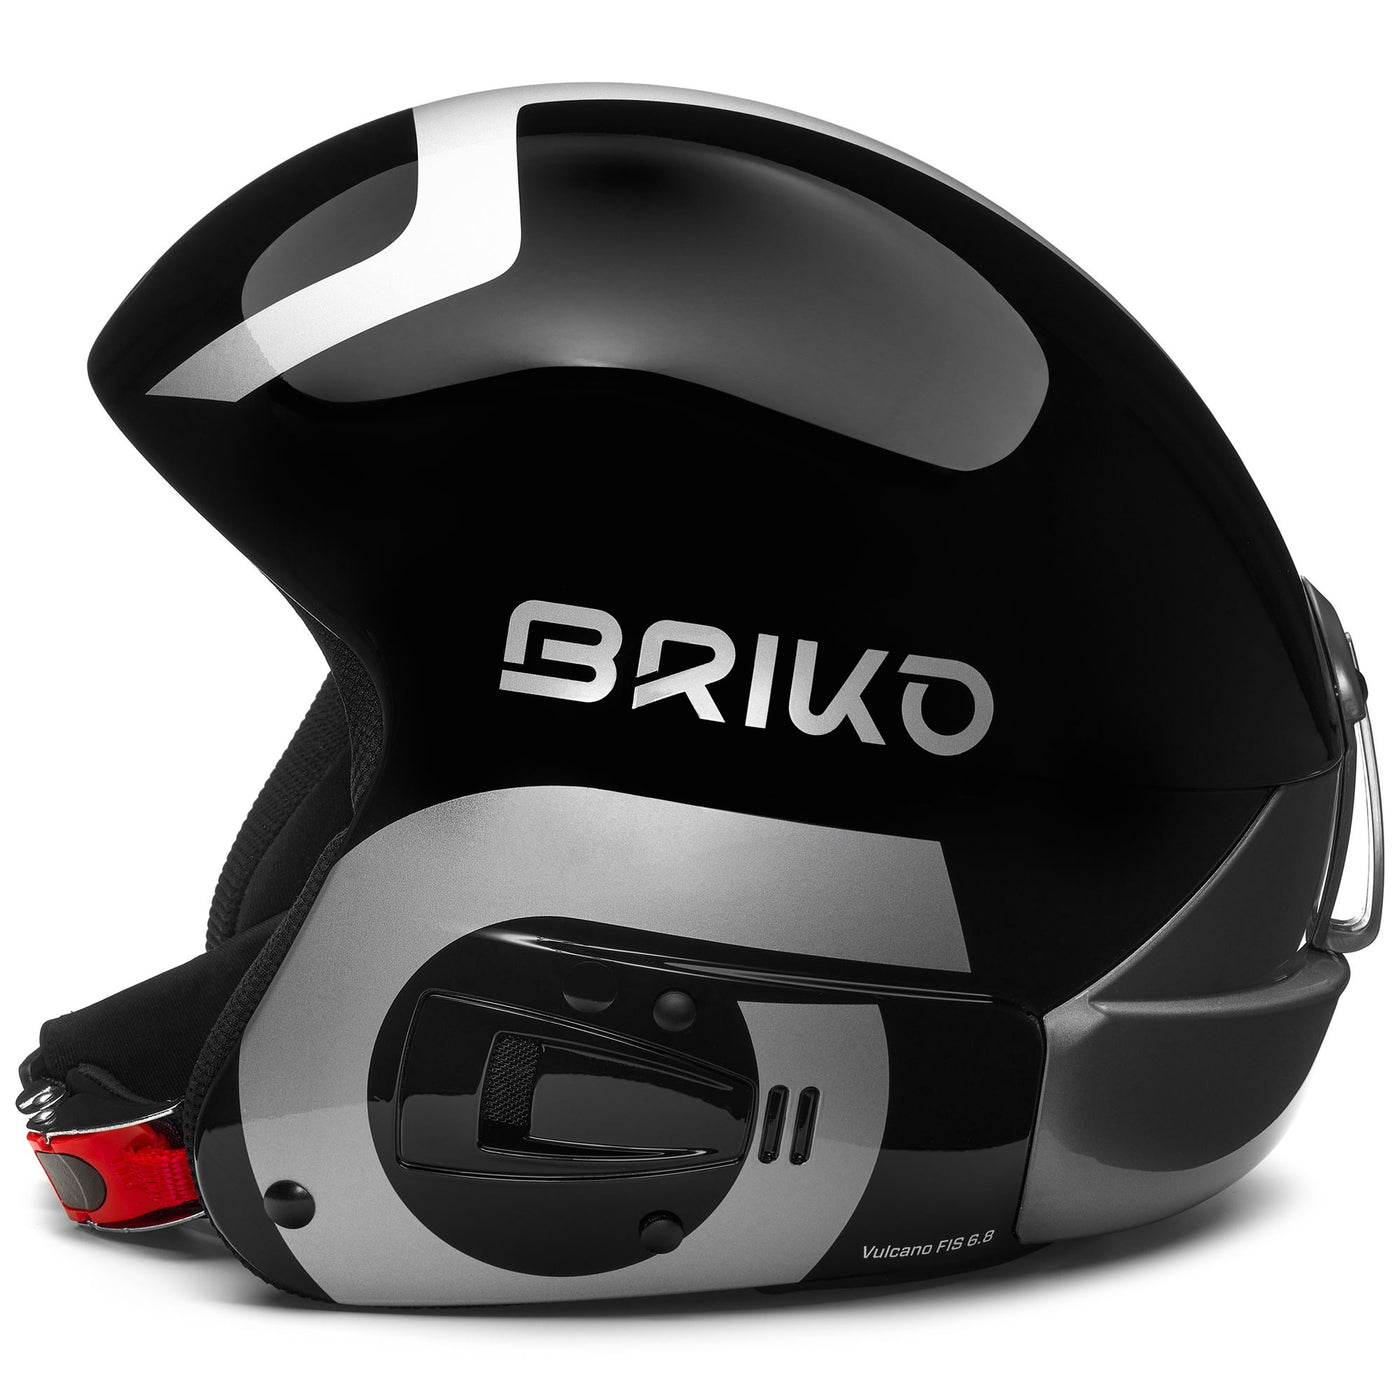 Helmets Unisex VULCANO FIS 6.8 EPP Helmet SHINY BLACK - SILVER Dressed Front (jpg Rgb)	